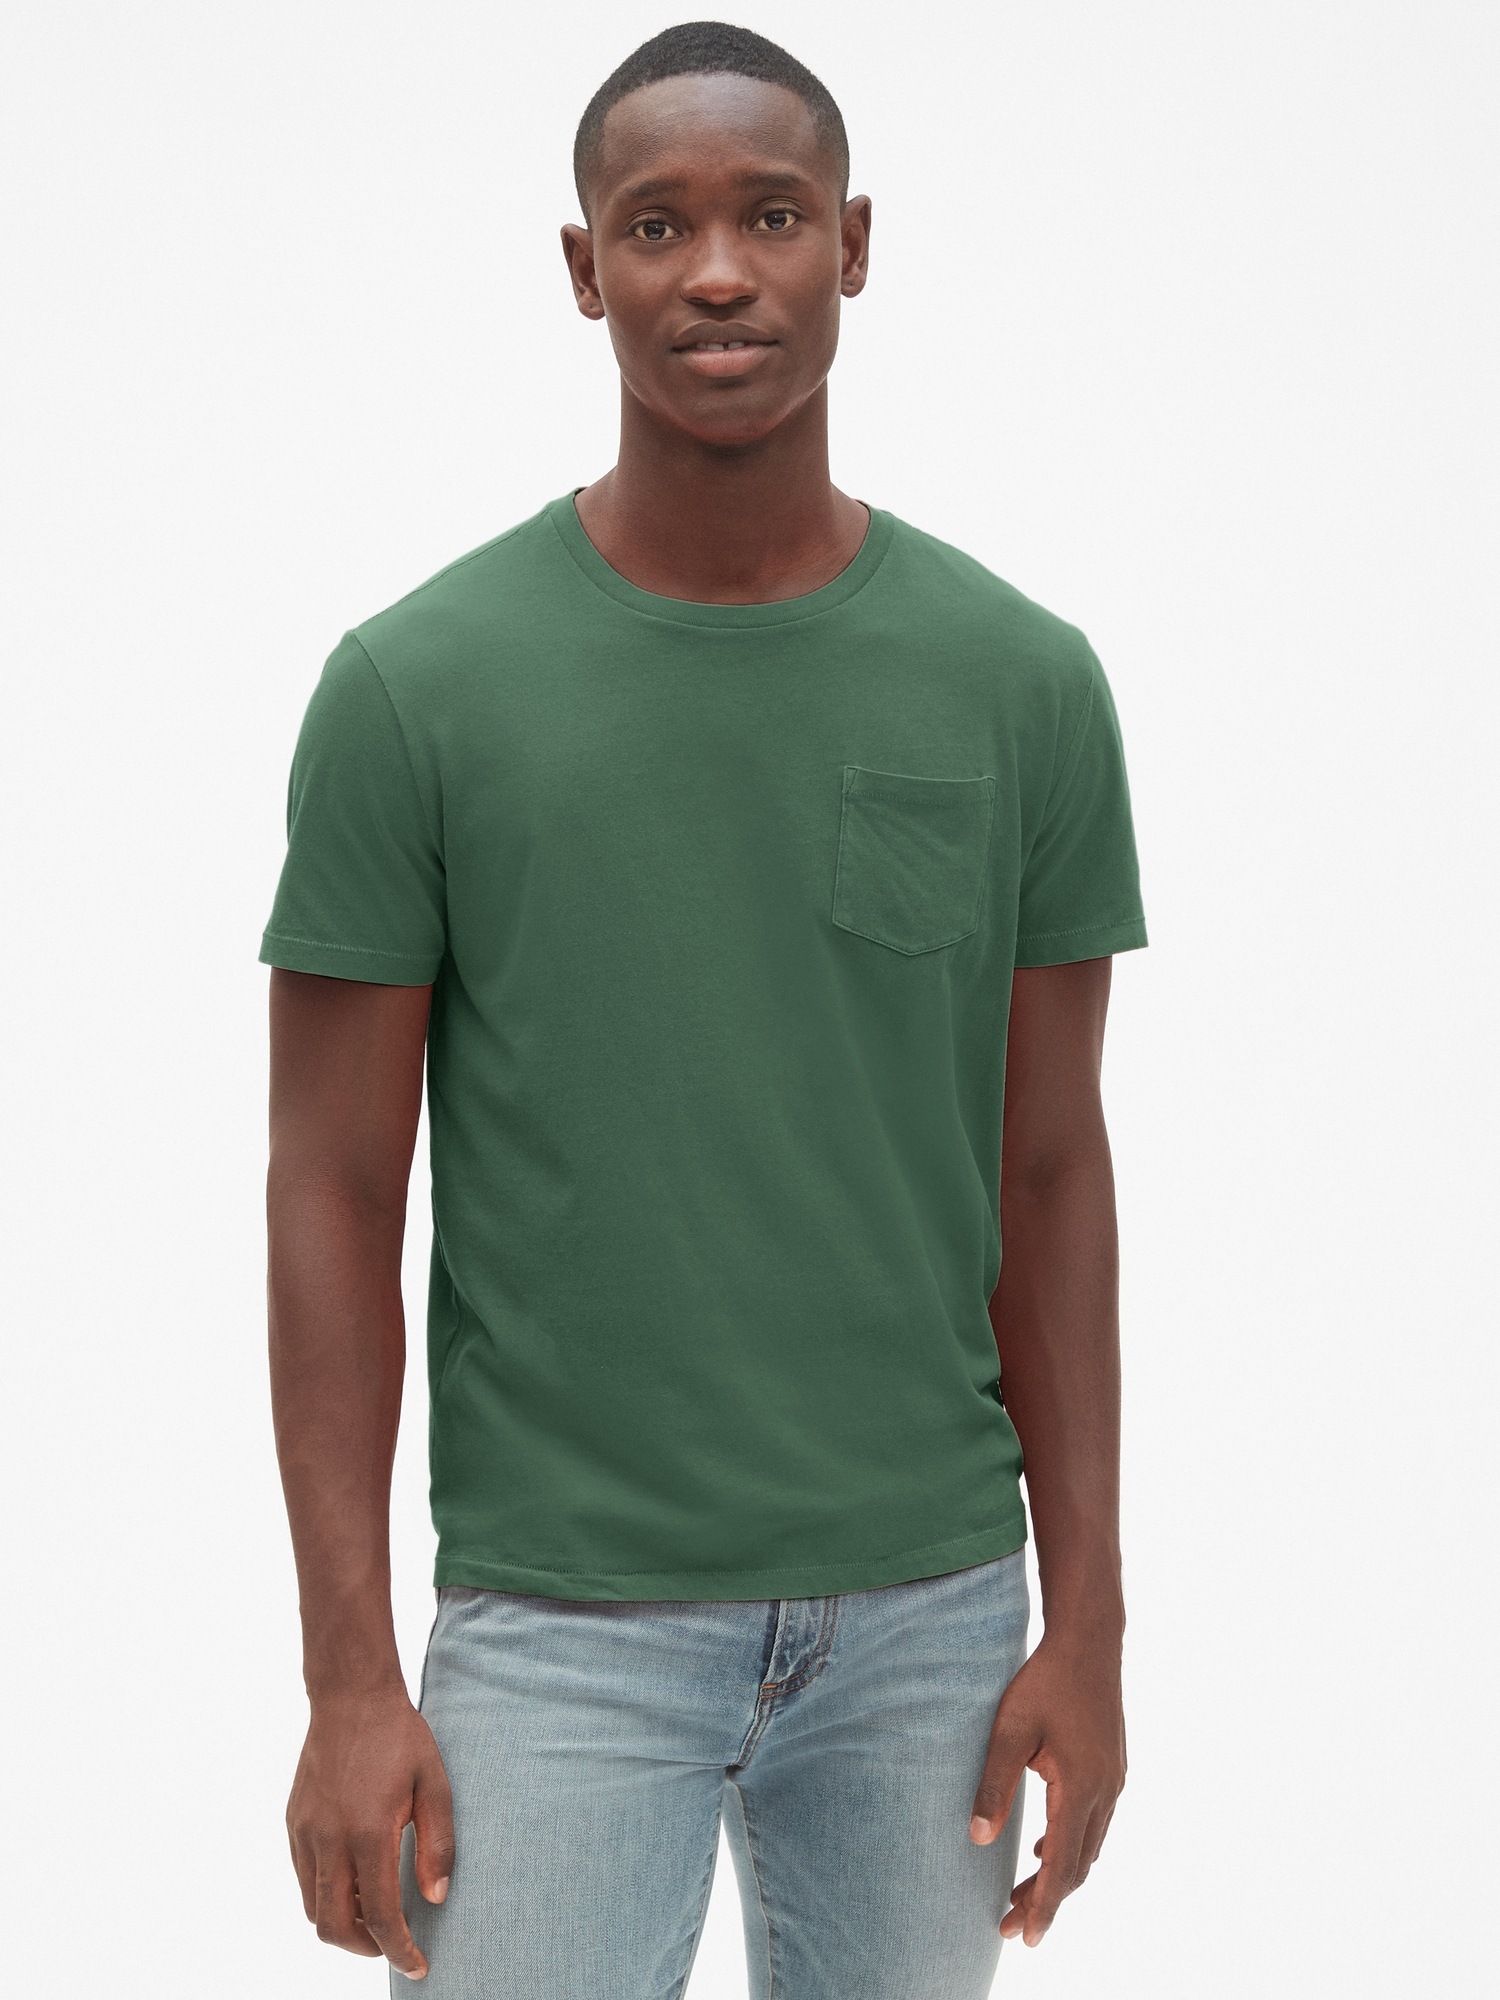 GAP Mens Pocket T-Shirt (3 Pack) T Shirt, Multi, X-Small US